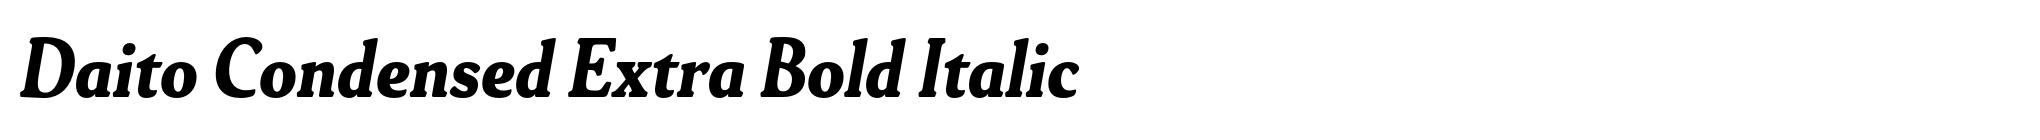 Daito Condensed Extra Bold Italic image